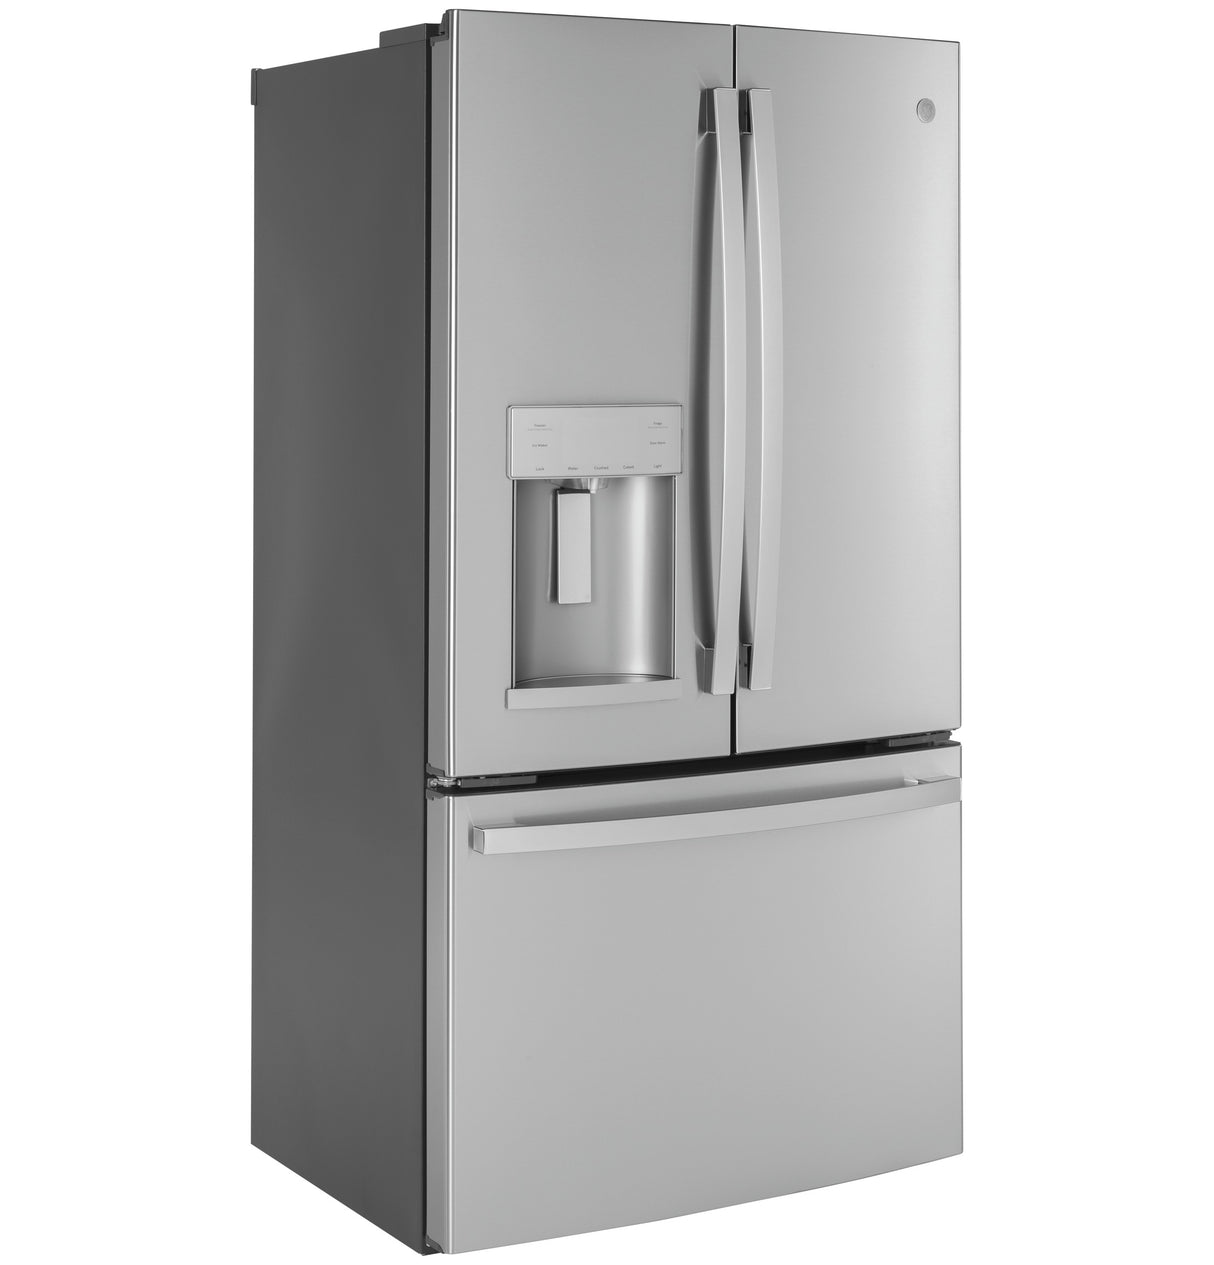 GE(R) ENERGY STAR(R) 22.1 Cu. Ft. Counter-Depth Fingerprint Resistant French-Door Refrigerator - (GYE22GYNFS)